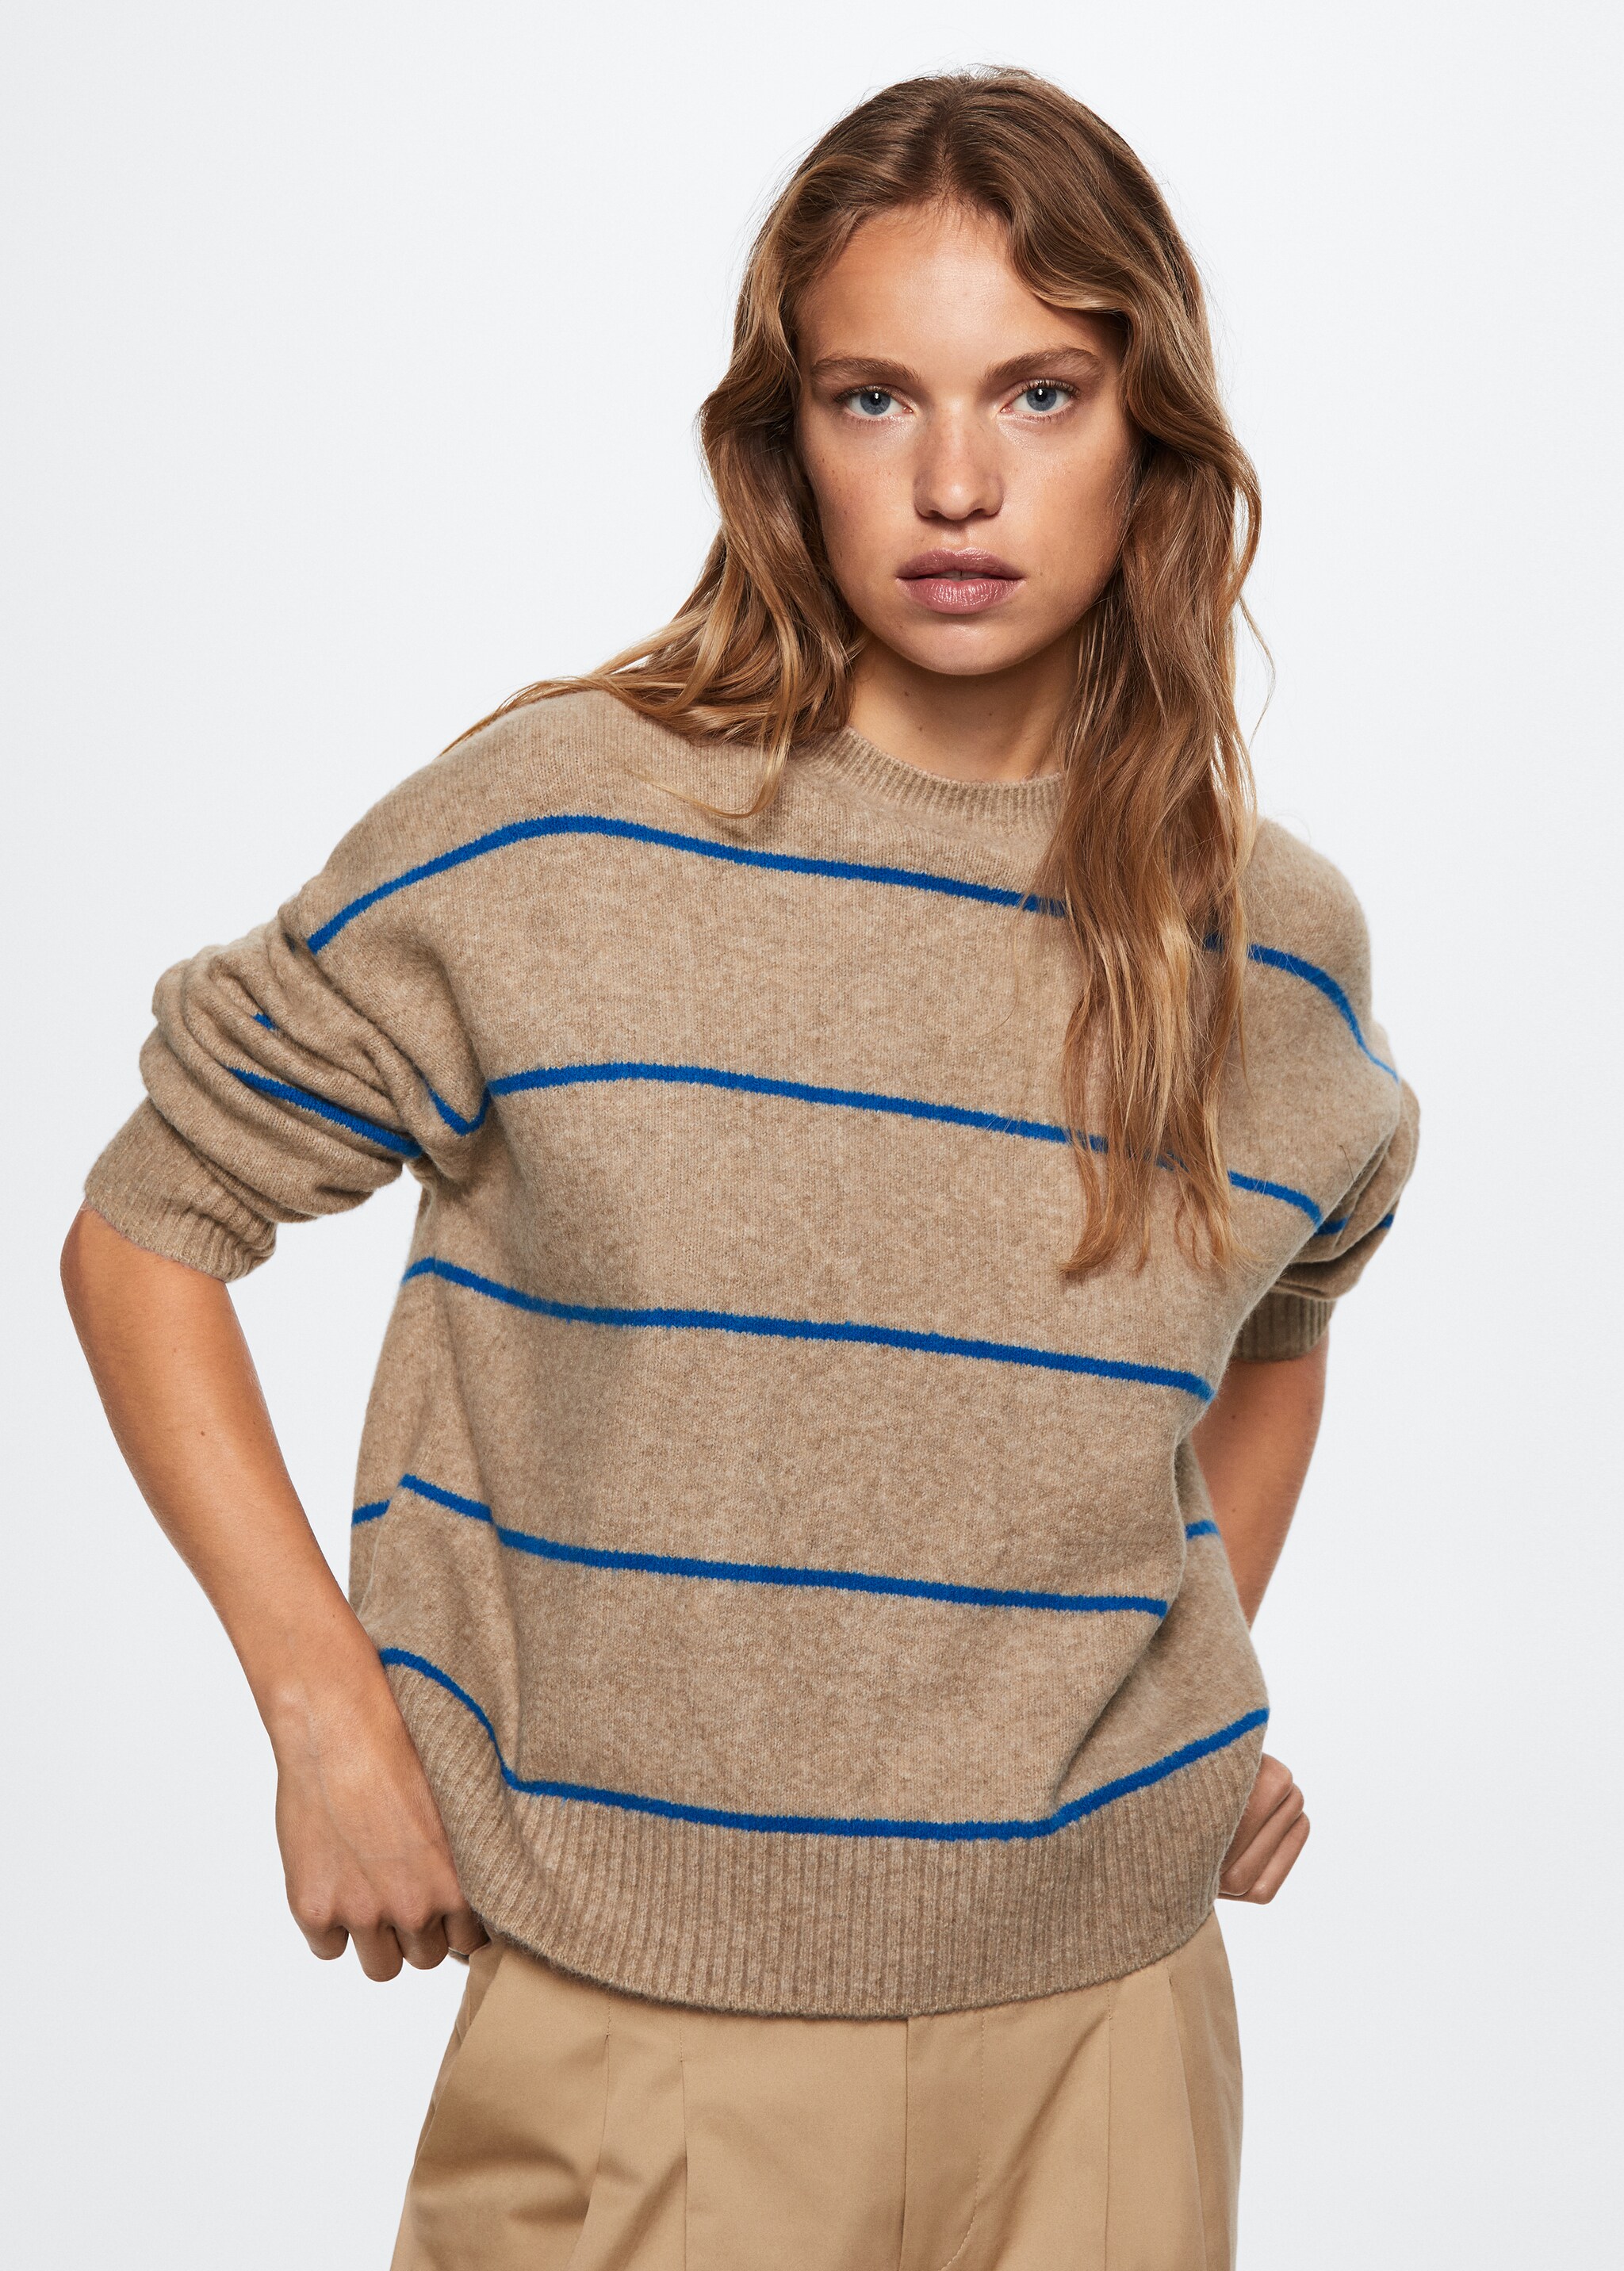 Round-neck knitted sweater  - Medium plane